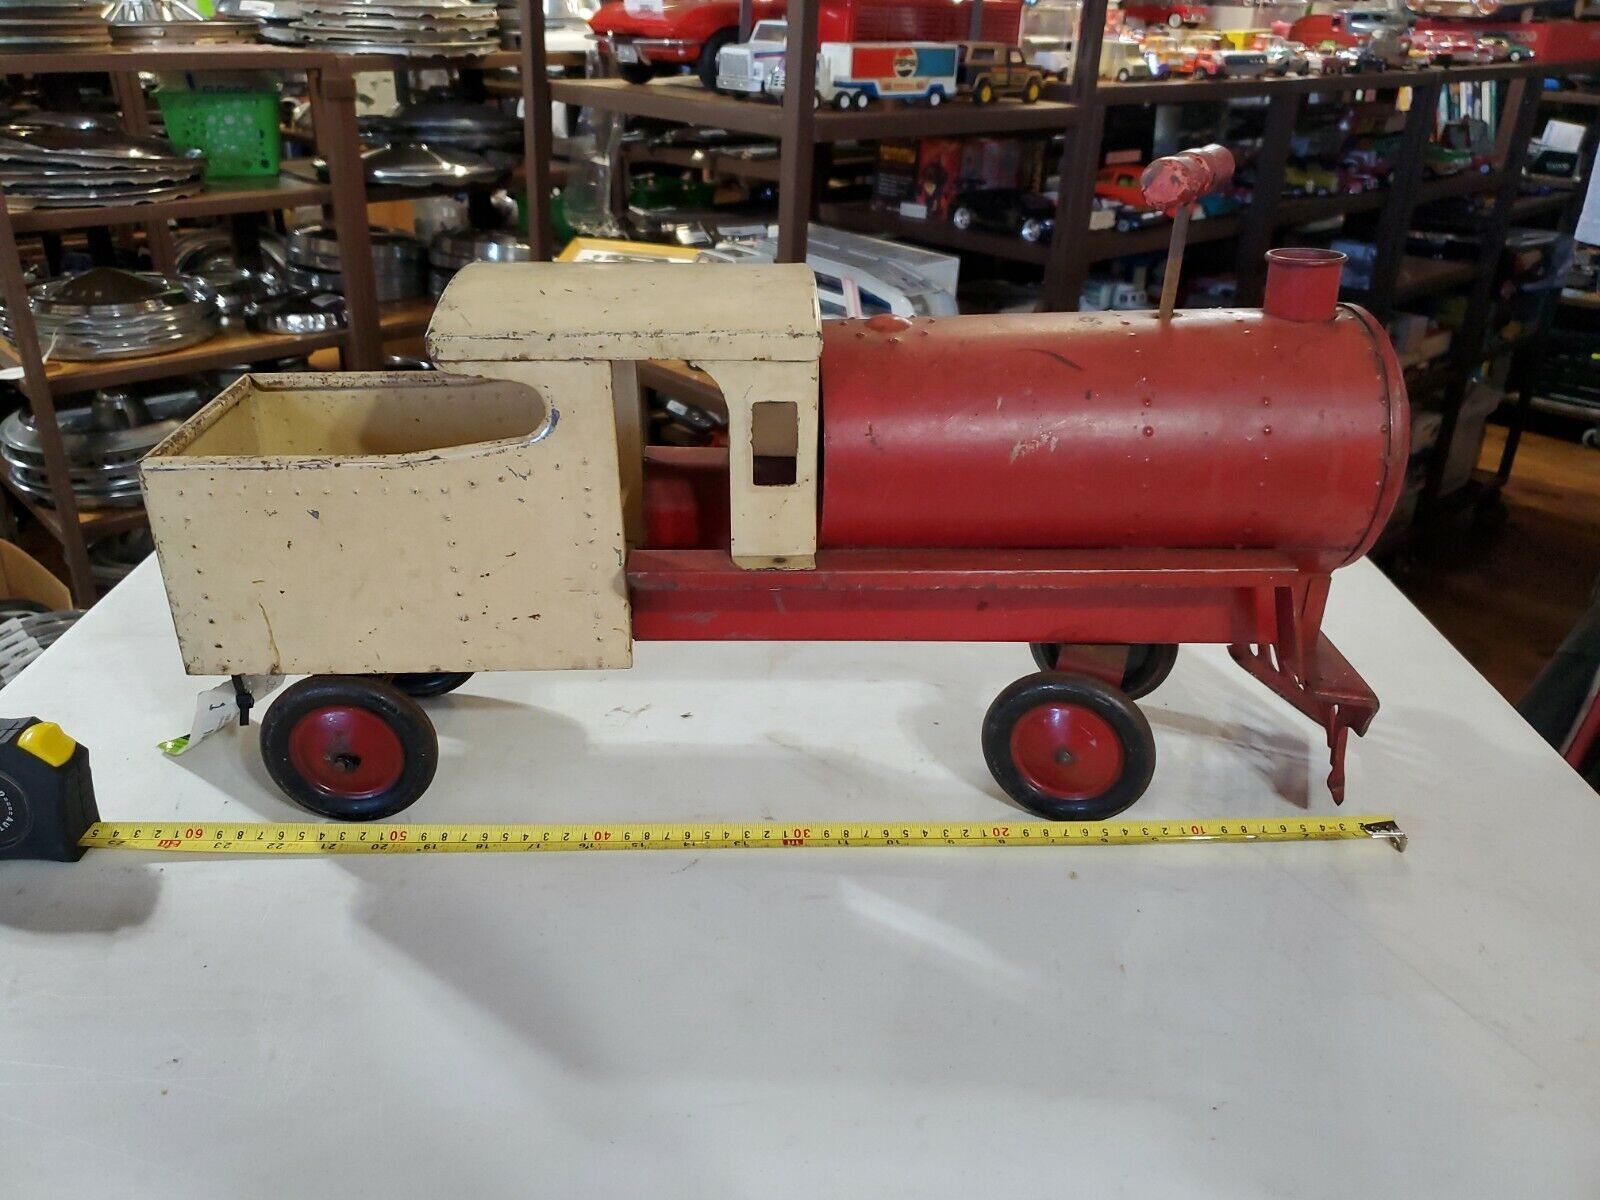 Vintage Sit On Tin Toy Train Locomotive Steelcraft? Keystone? Original paint